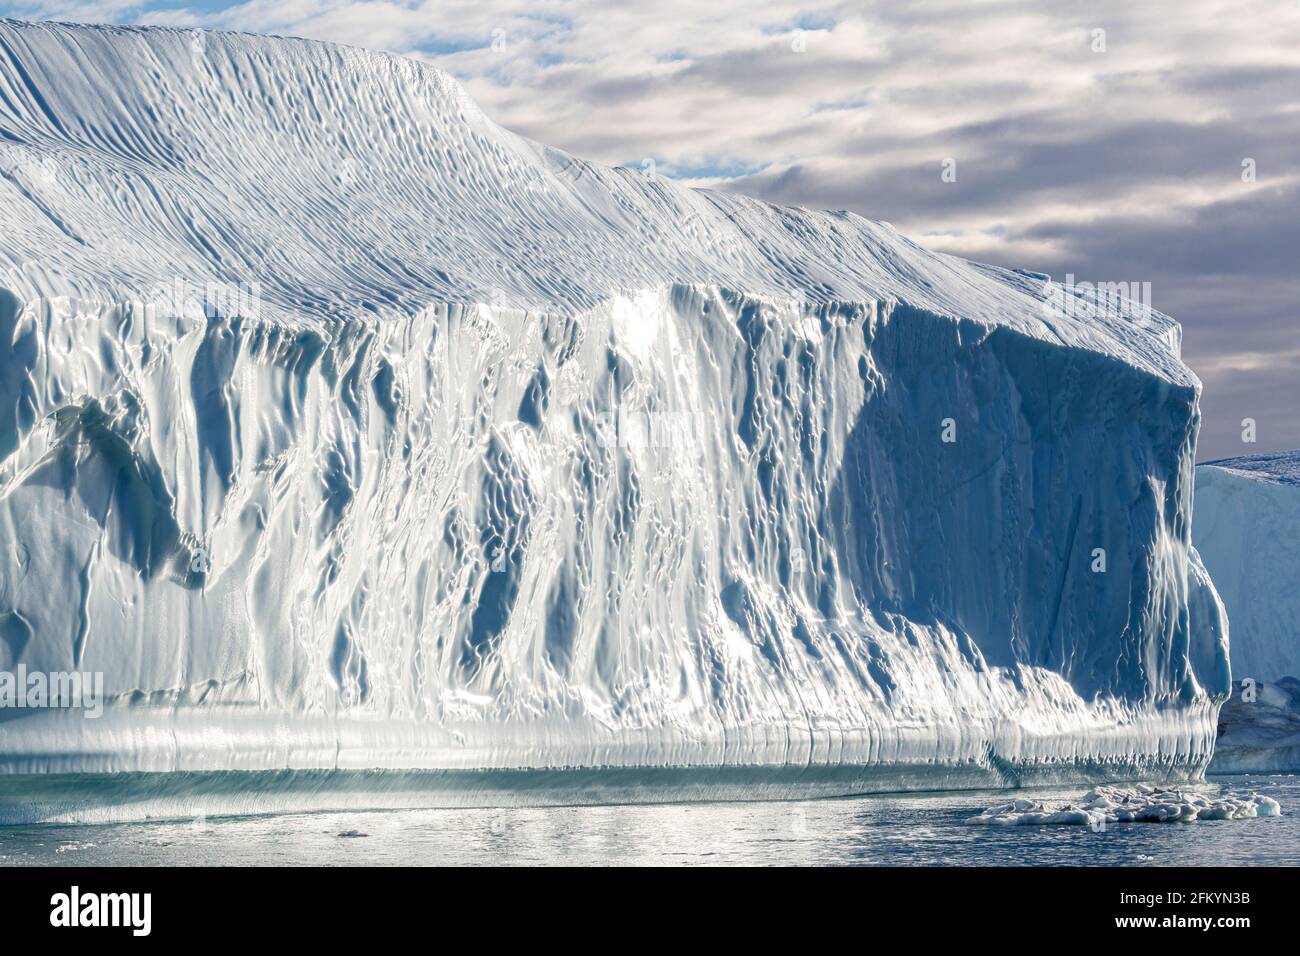 Massive icebergs calved from the Jakobshavn Isbræ glacier, UNESCO World Heritage site, Ilulissat, Greenland. Stock Photo